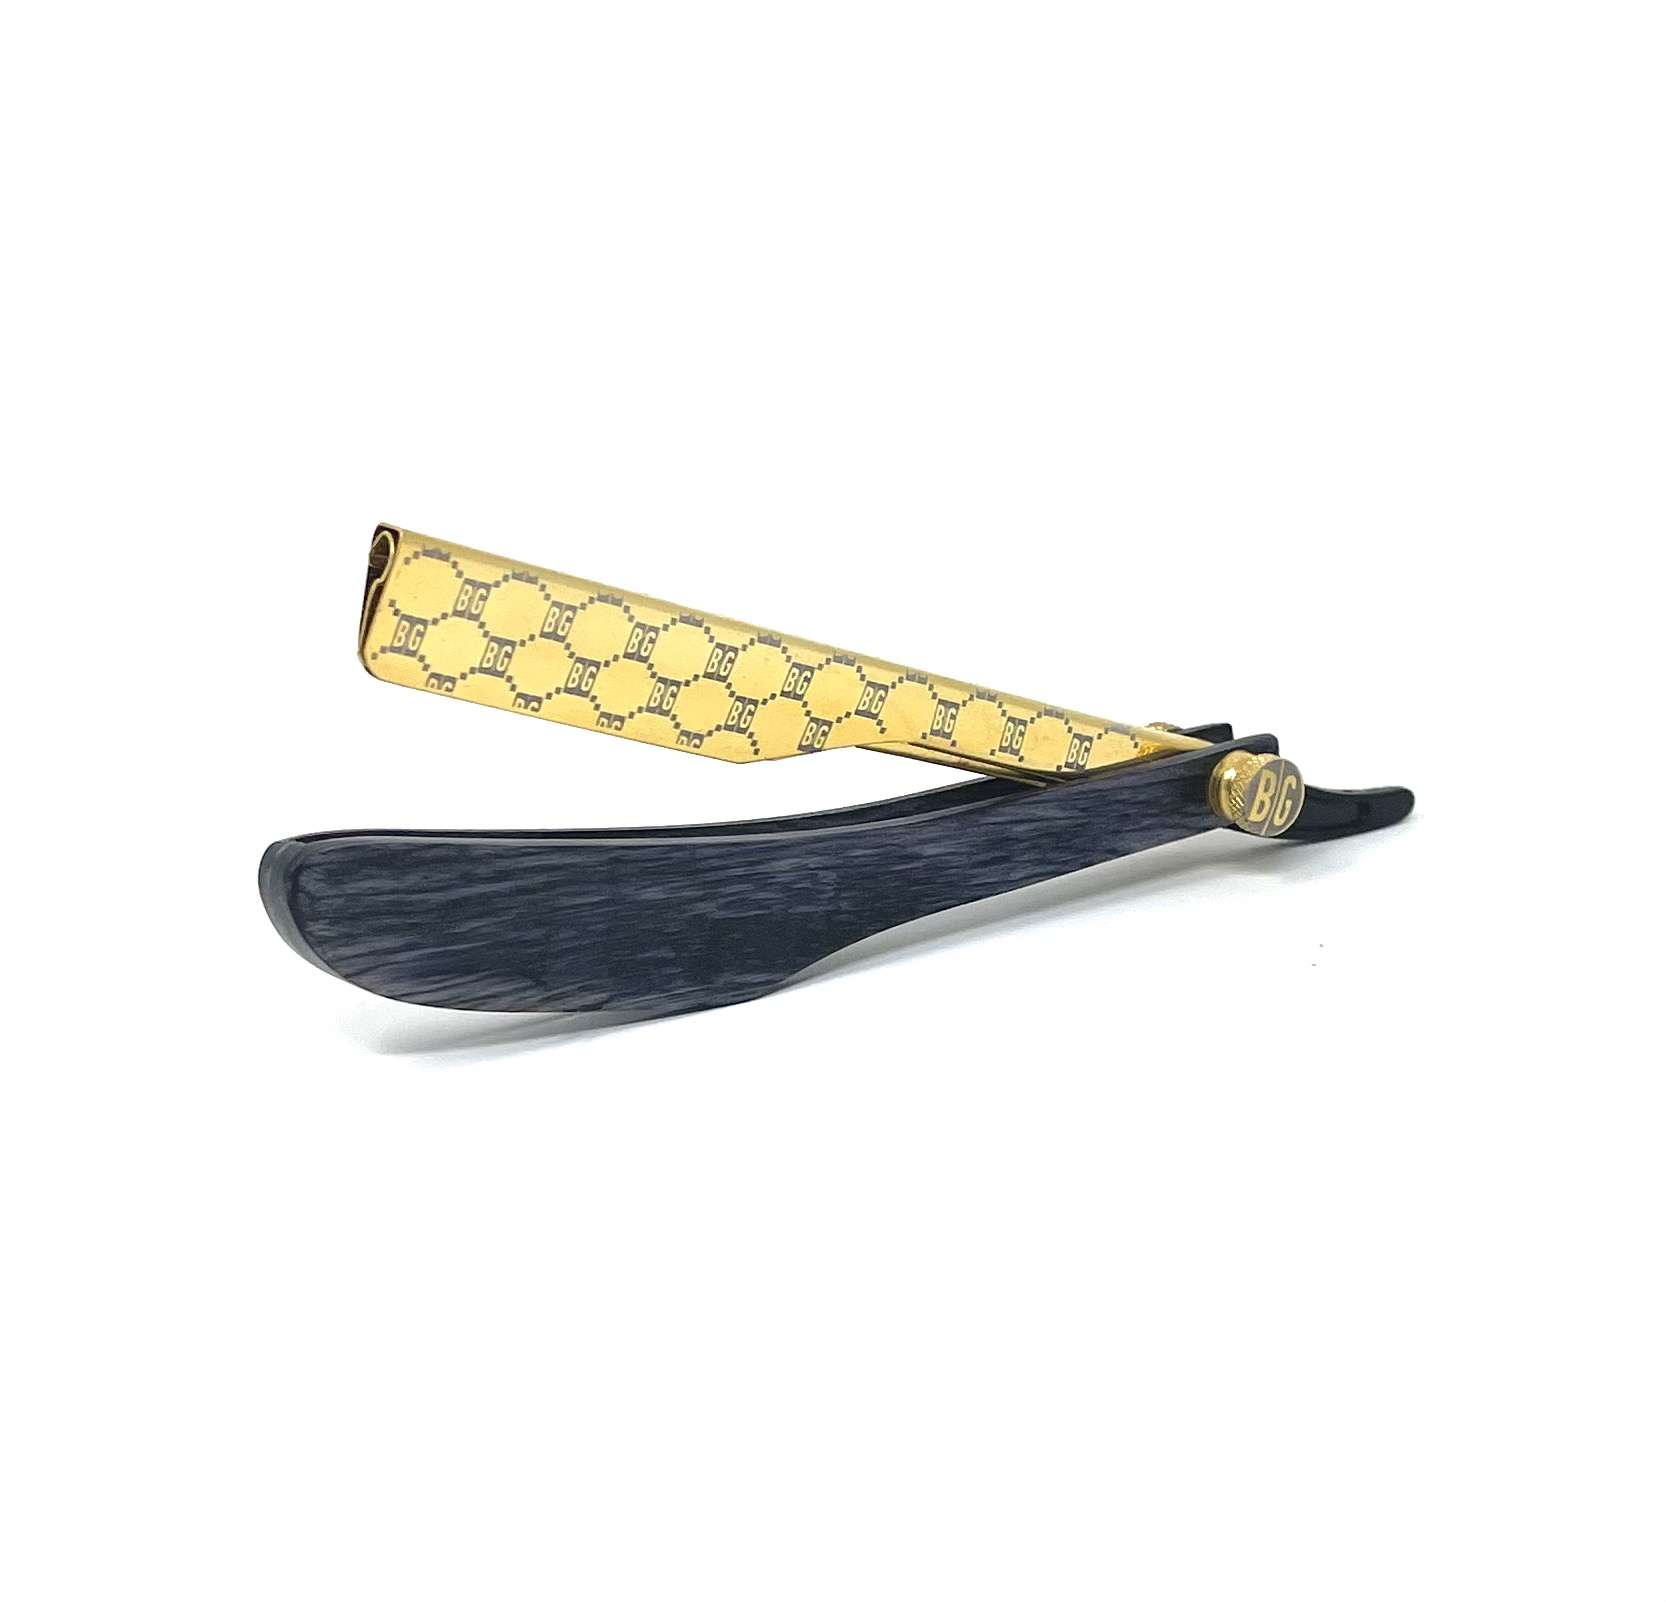 BarberGeeks Razor Holder - First Class Gold & wood handle